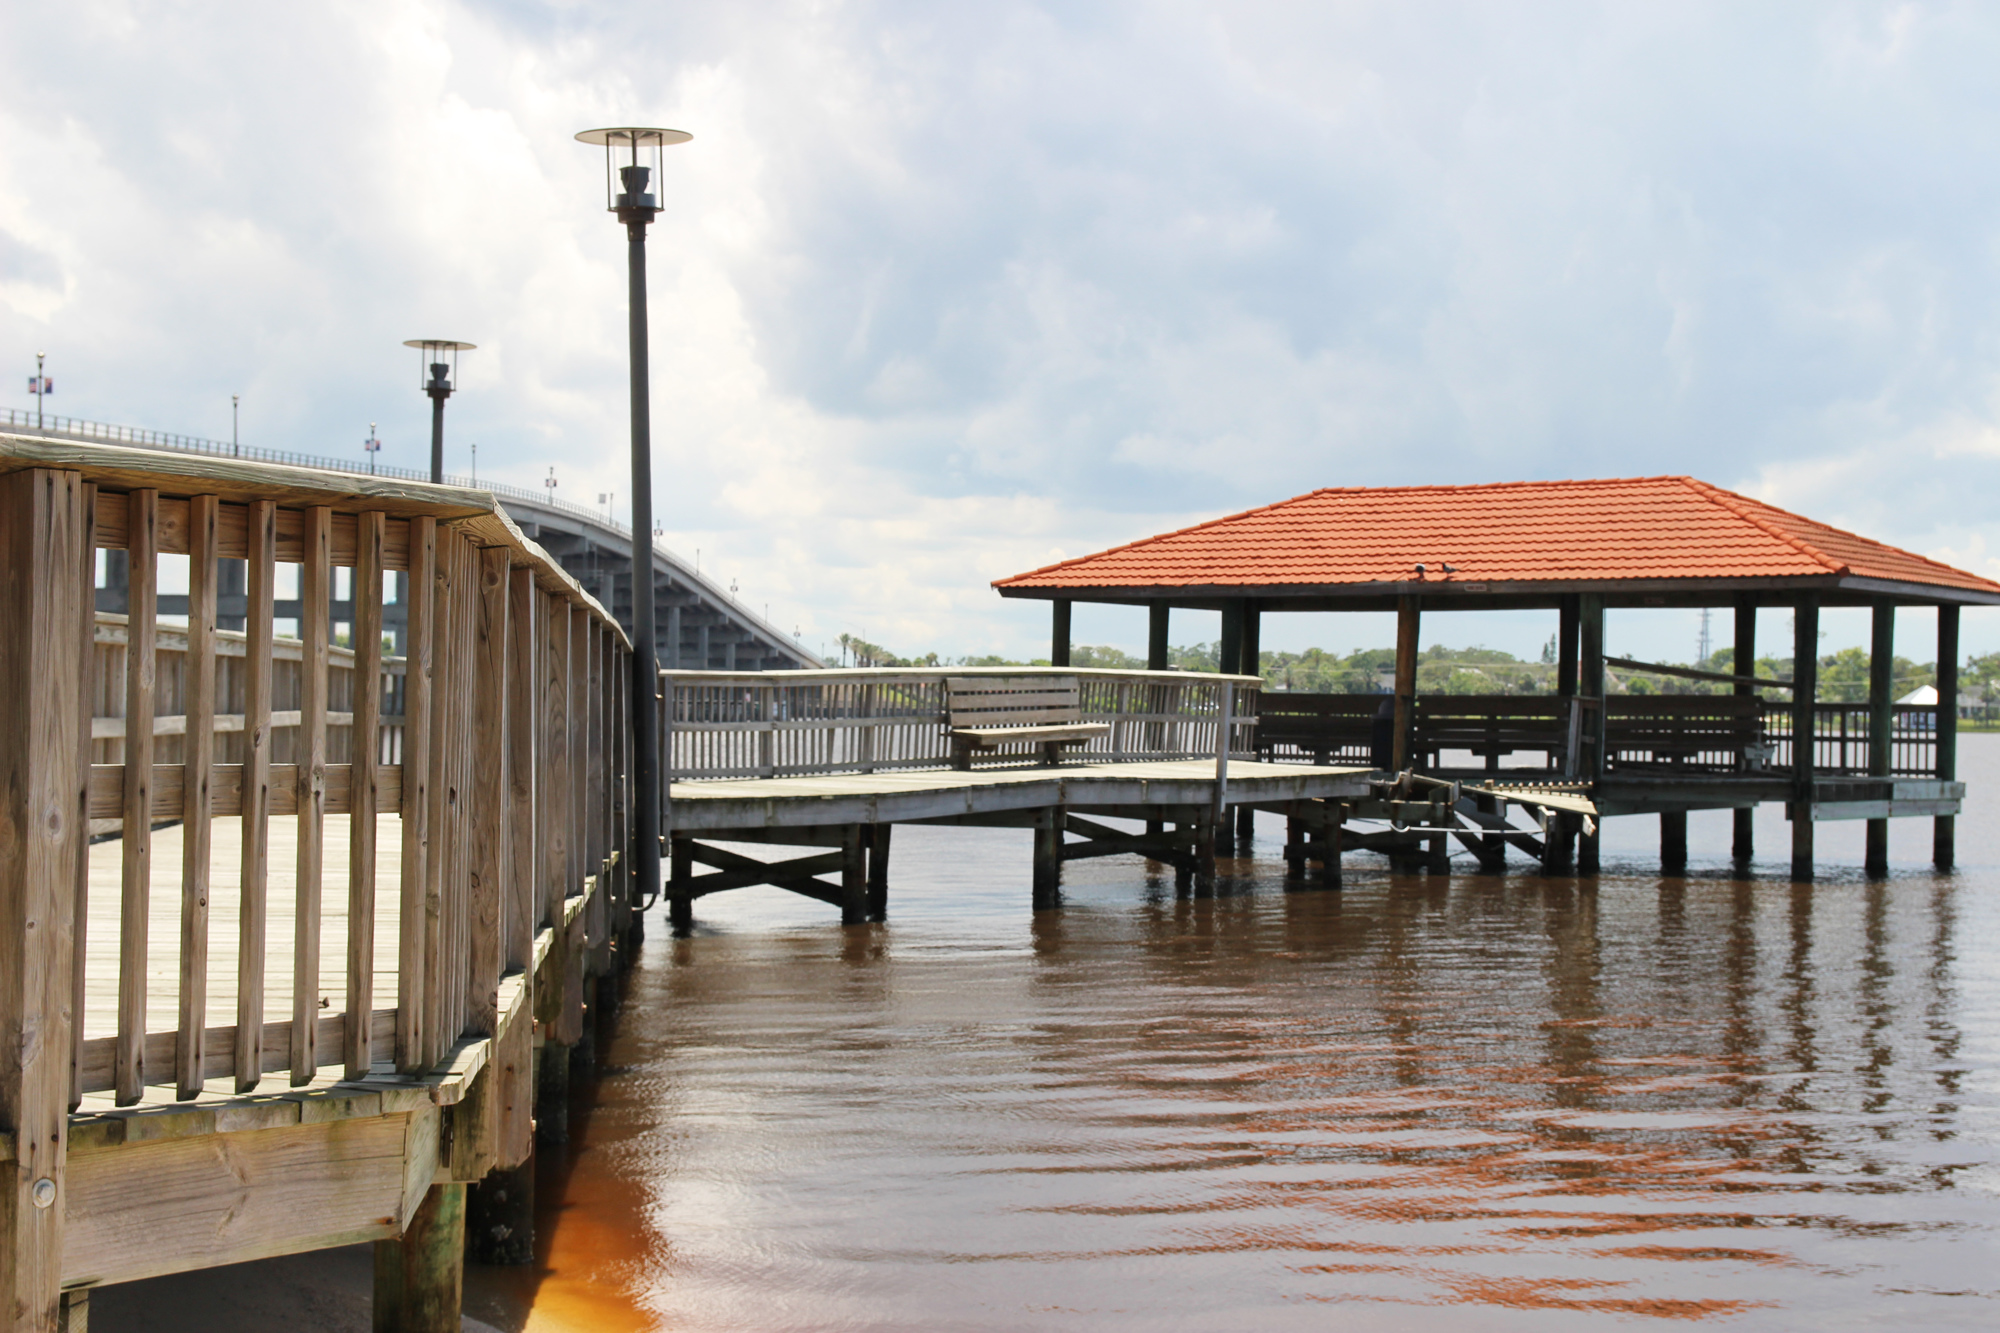 The fishing pier at Fortunato Park has been closed since Hurricane Irma. Photo by Jarleene Almenas